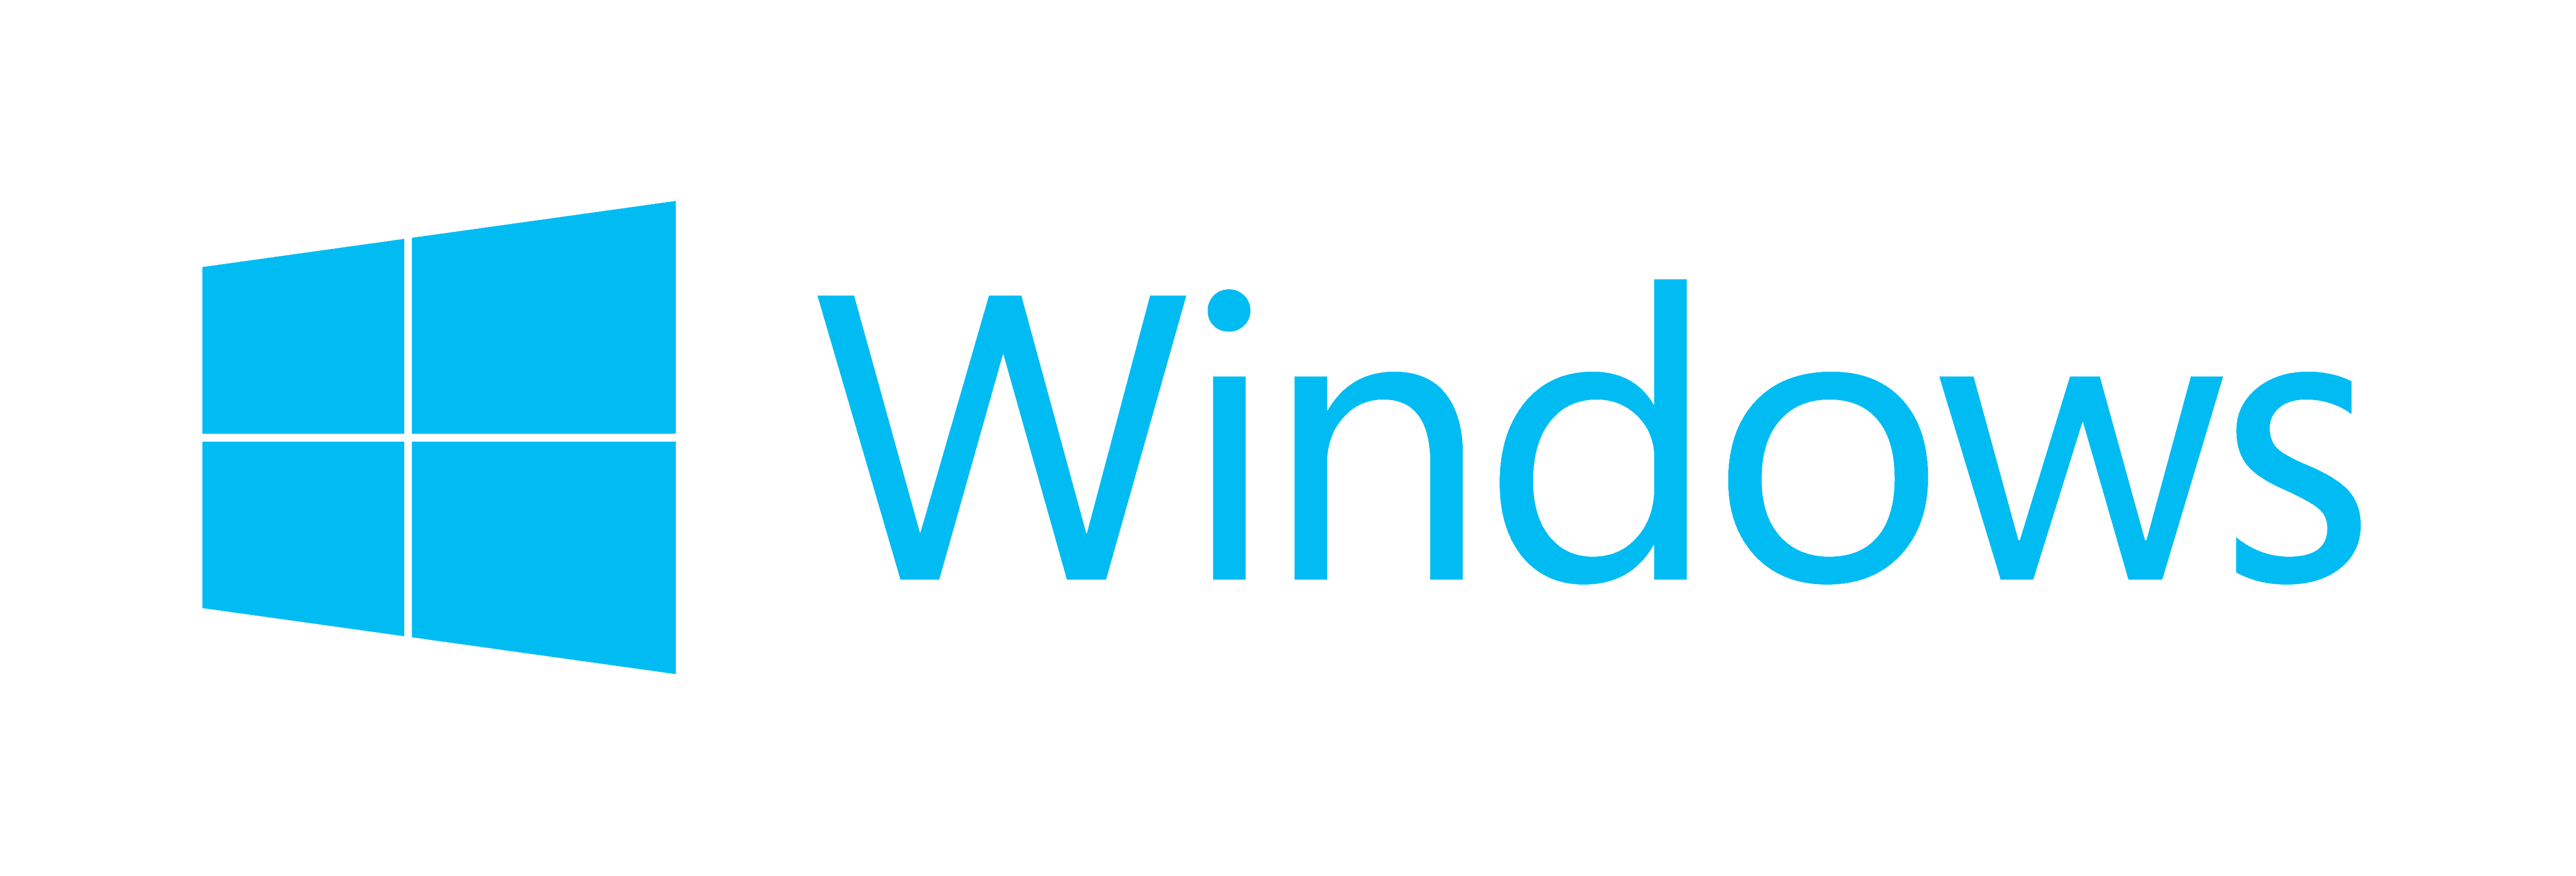 Licenze Microsoft Windows gratis